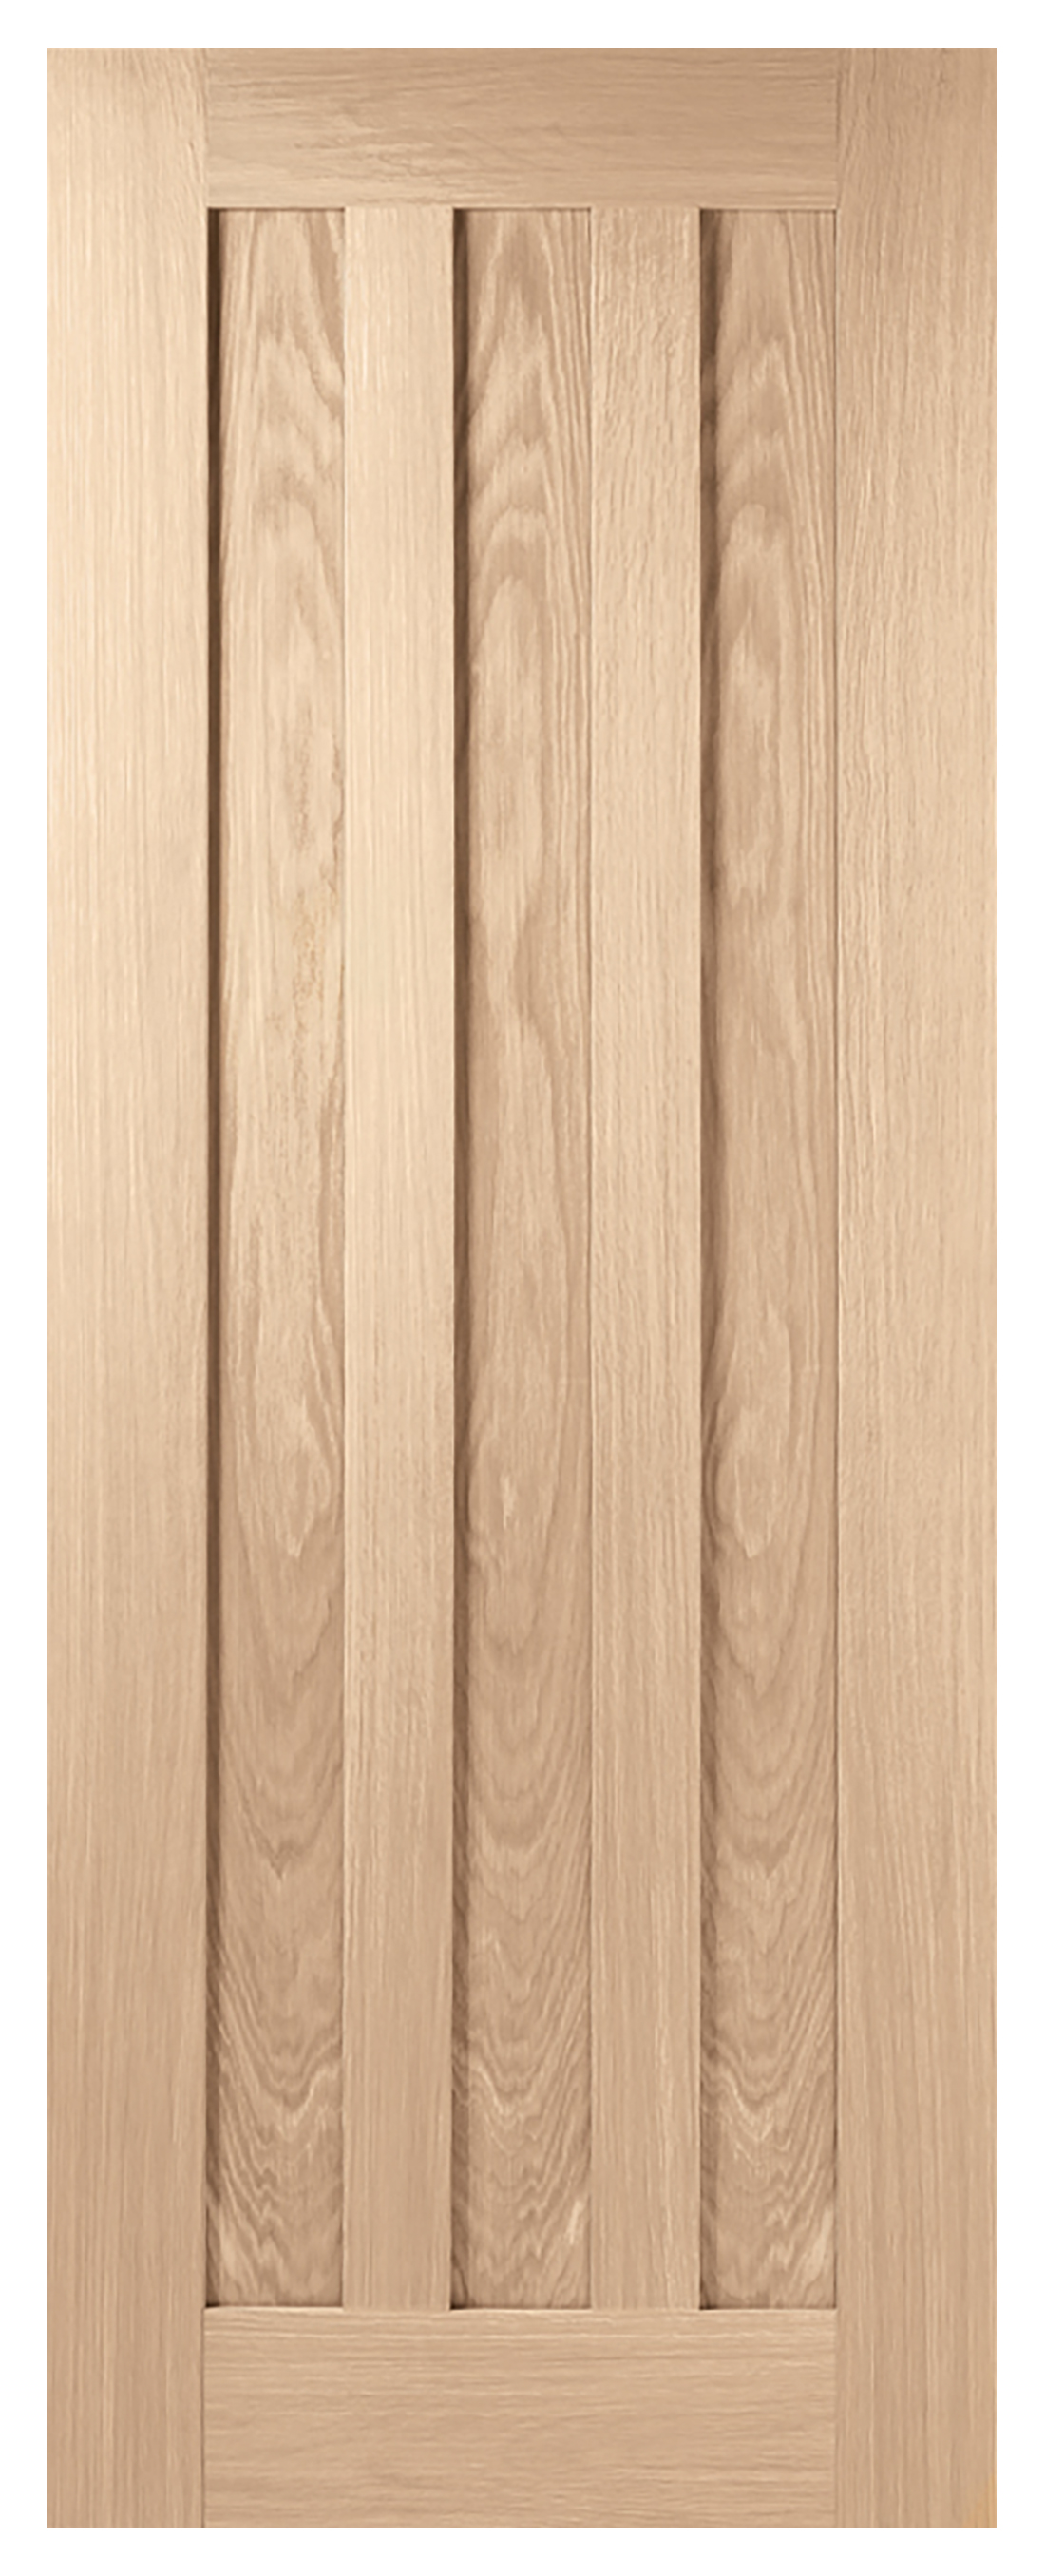 Image of LPD Internal Idaho 3 Panel Unfinished Oak FD30 Fire Door - 726 x 2040mm